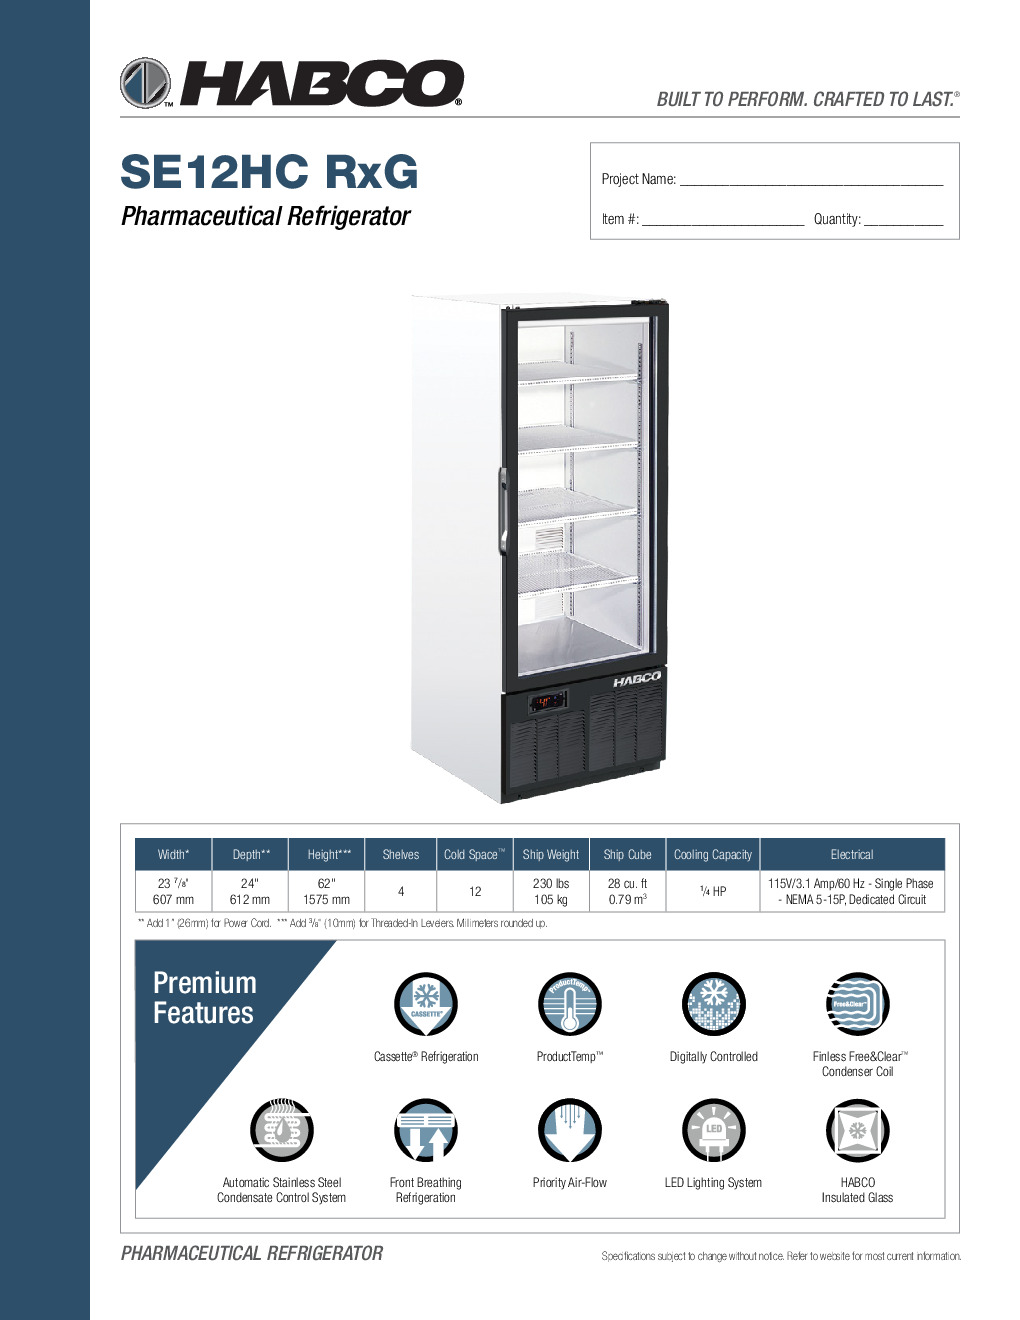 HABCO SE12HCRXG Medical Refrigerator